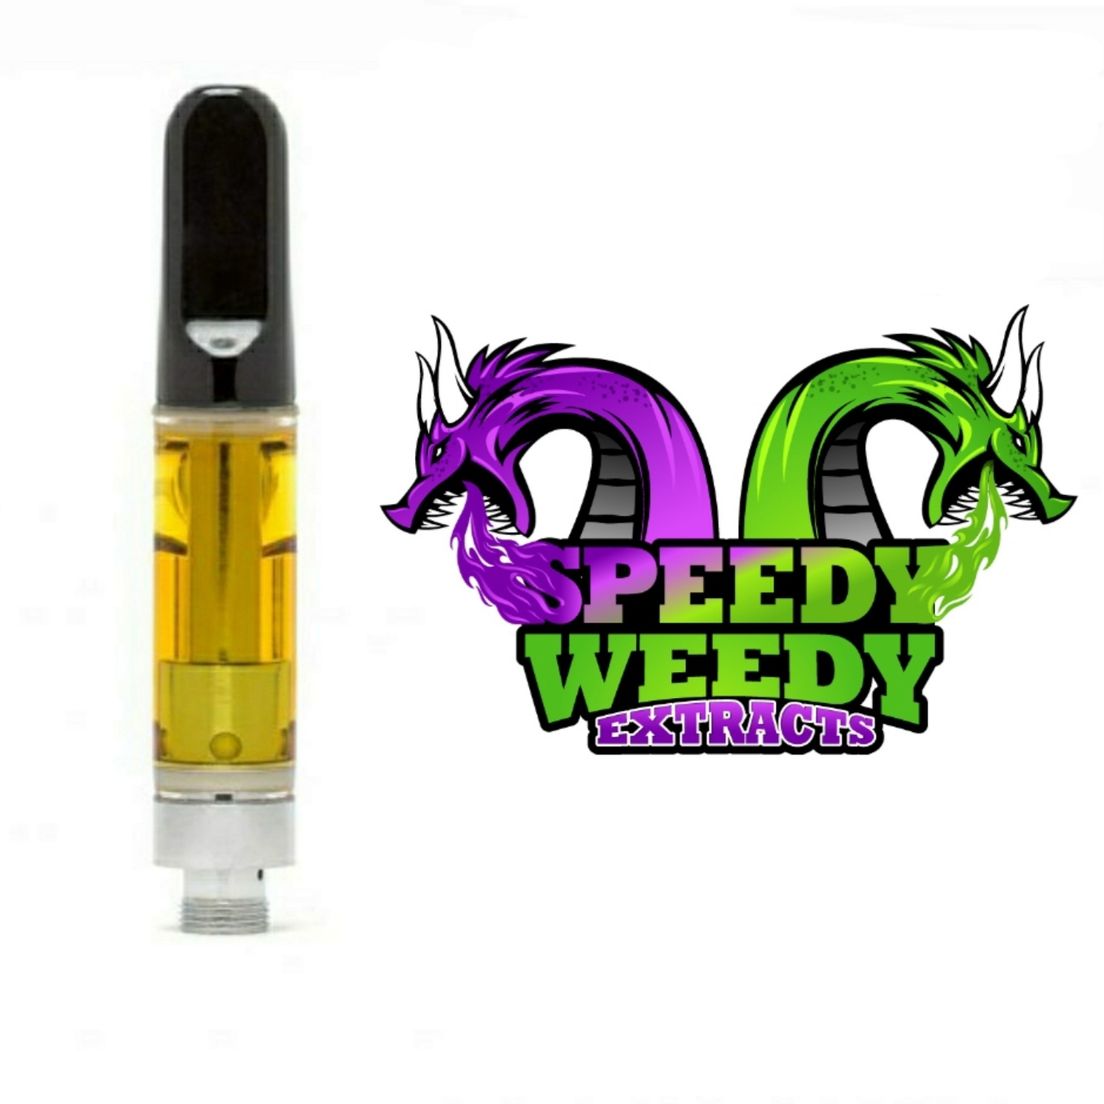 1. Speedy Weedy 1g THC Vape Cartridge - Blackberry Kush (I) 3/$60